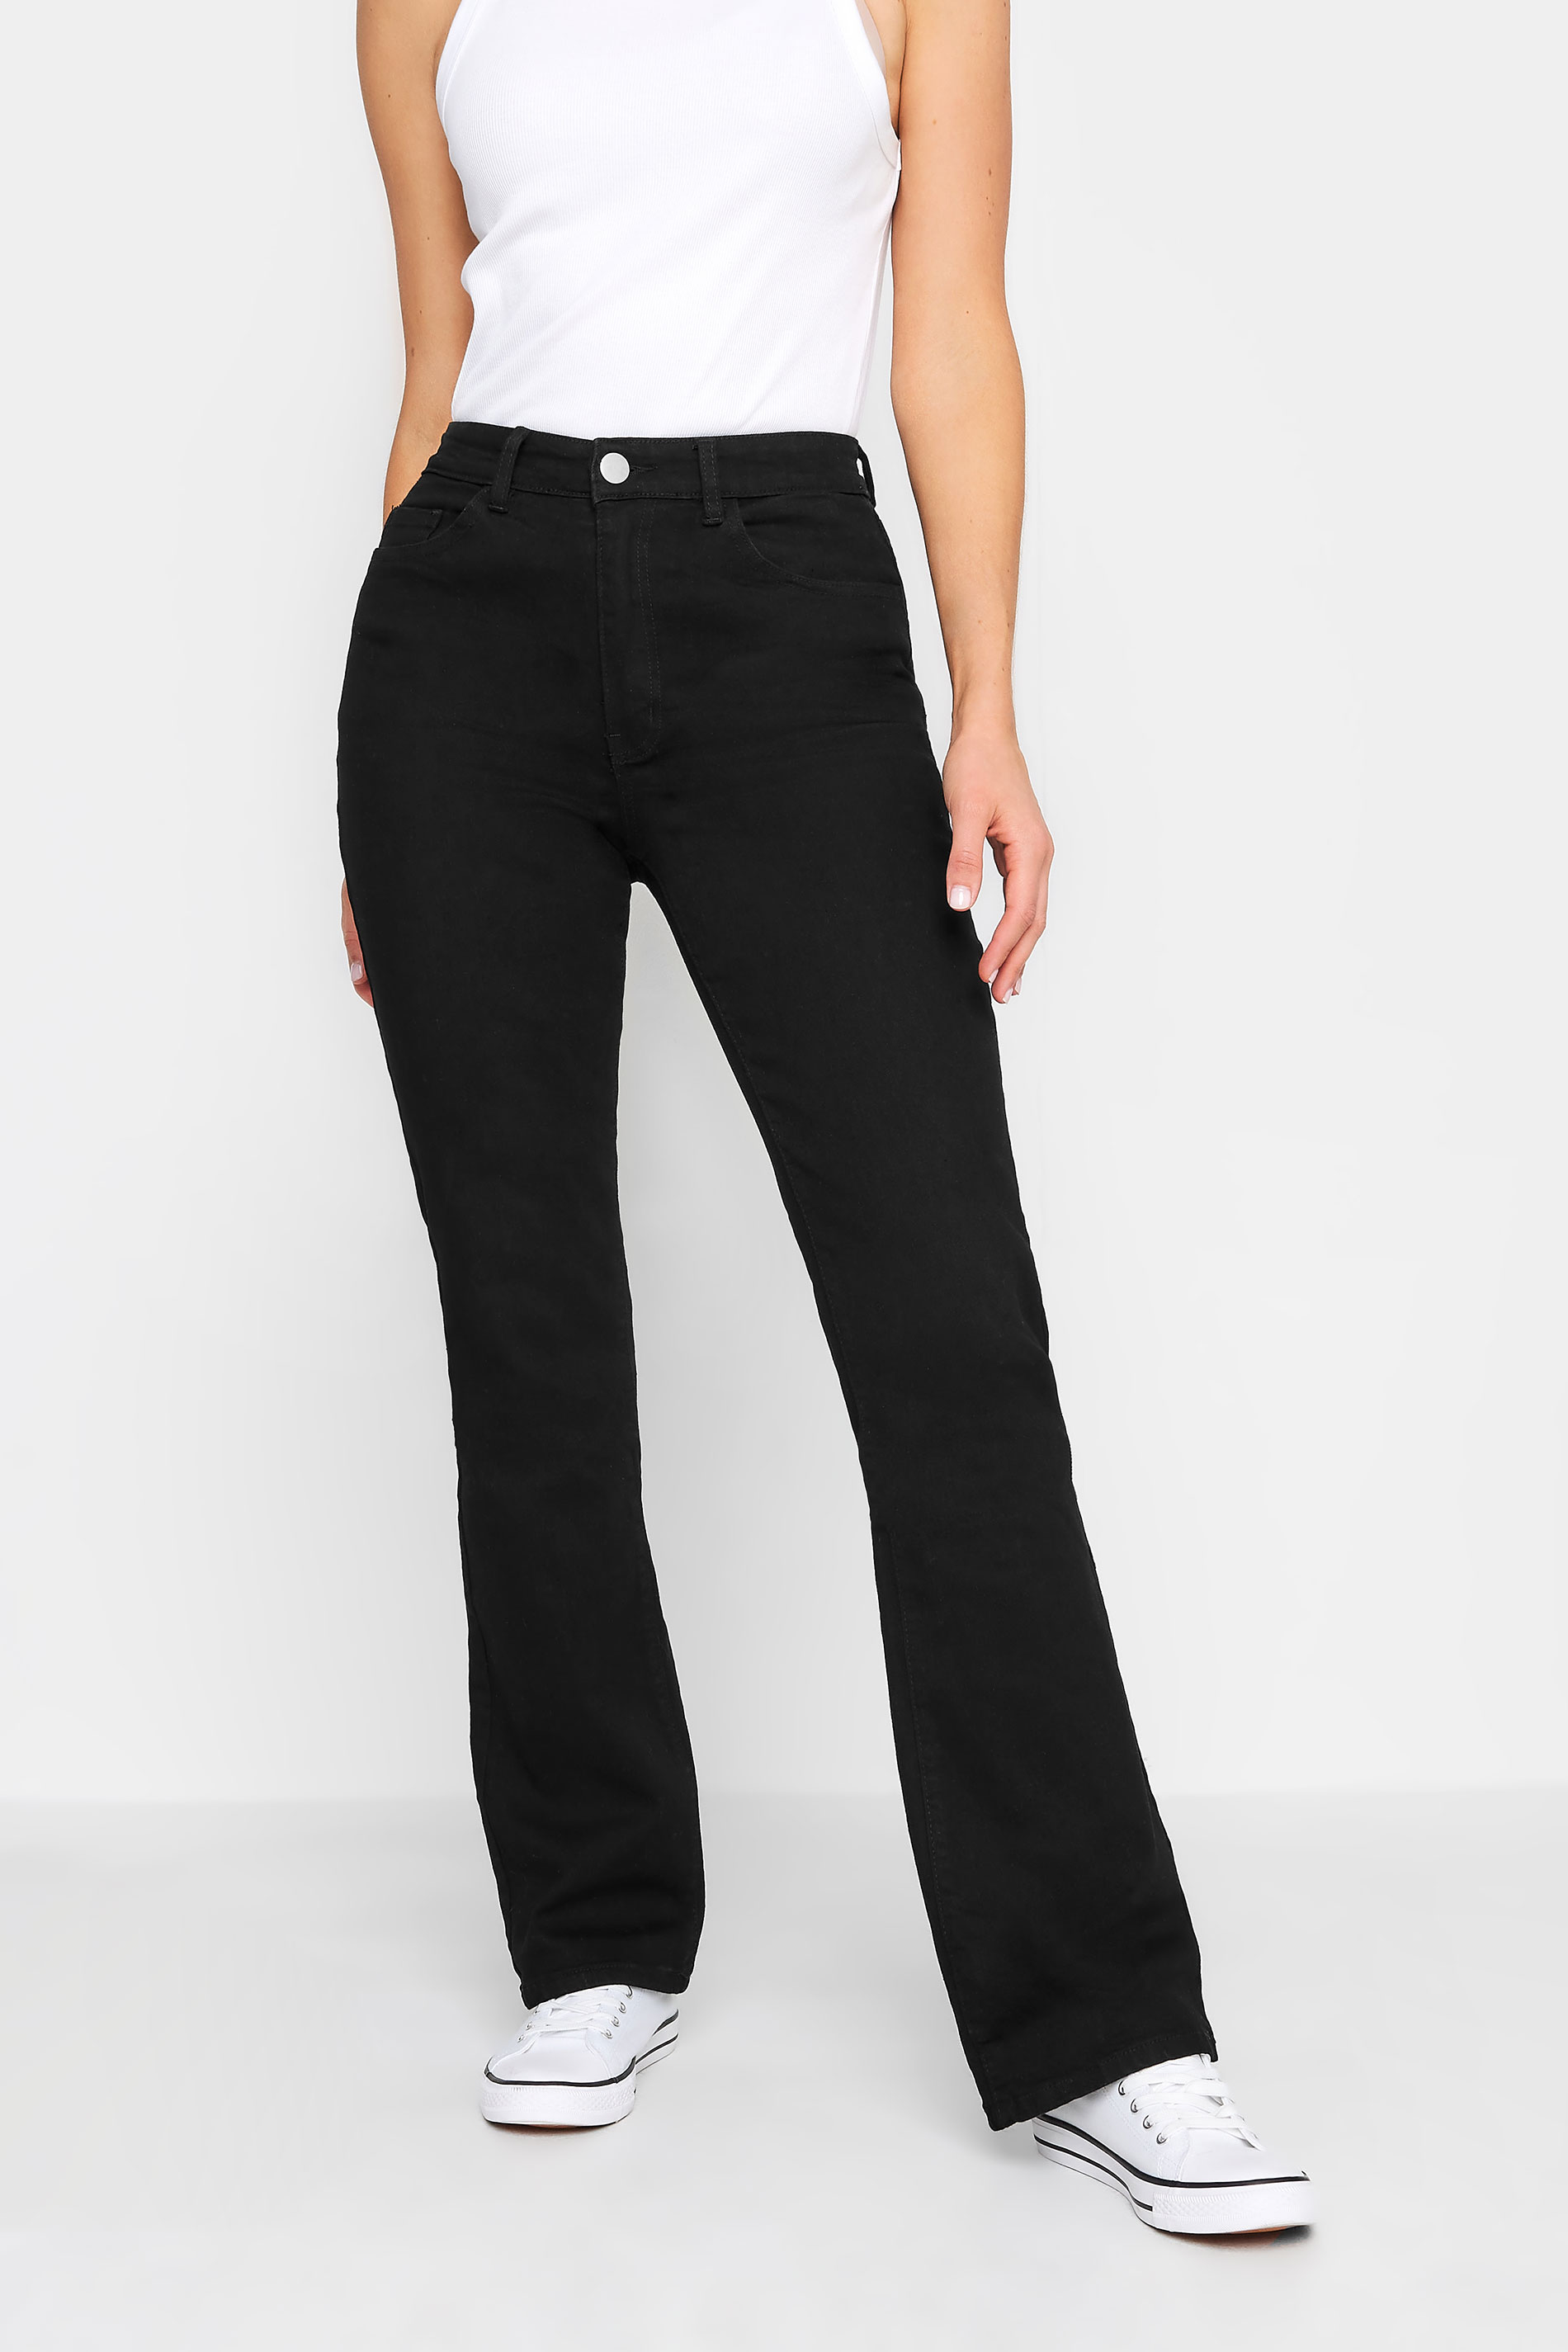 LTS Tall Women's Black Bootcut Jeans | Long Tall Sally 1